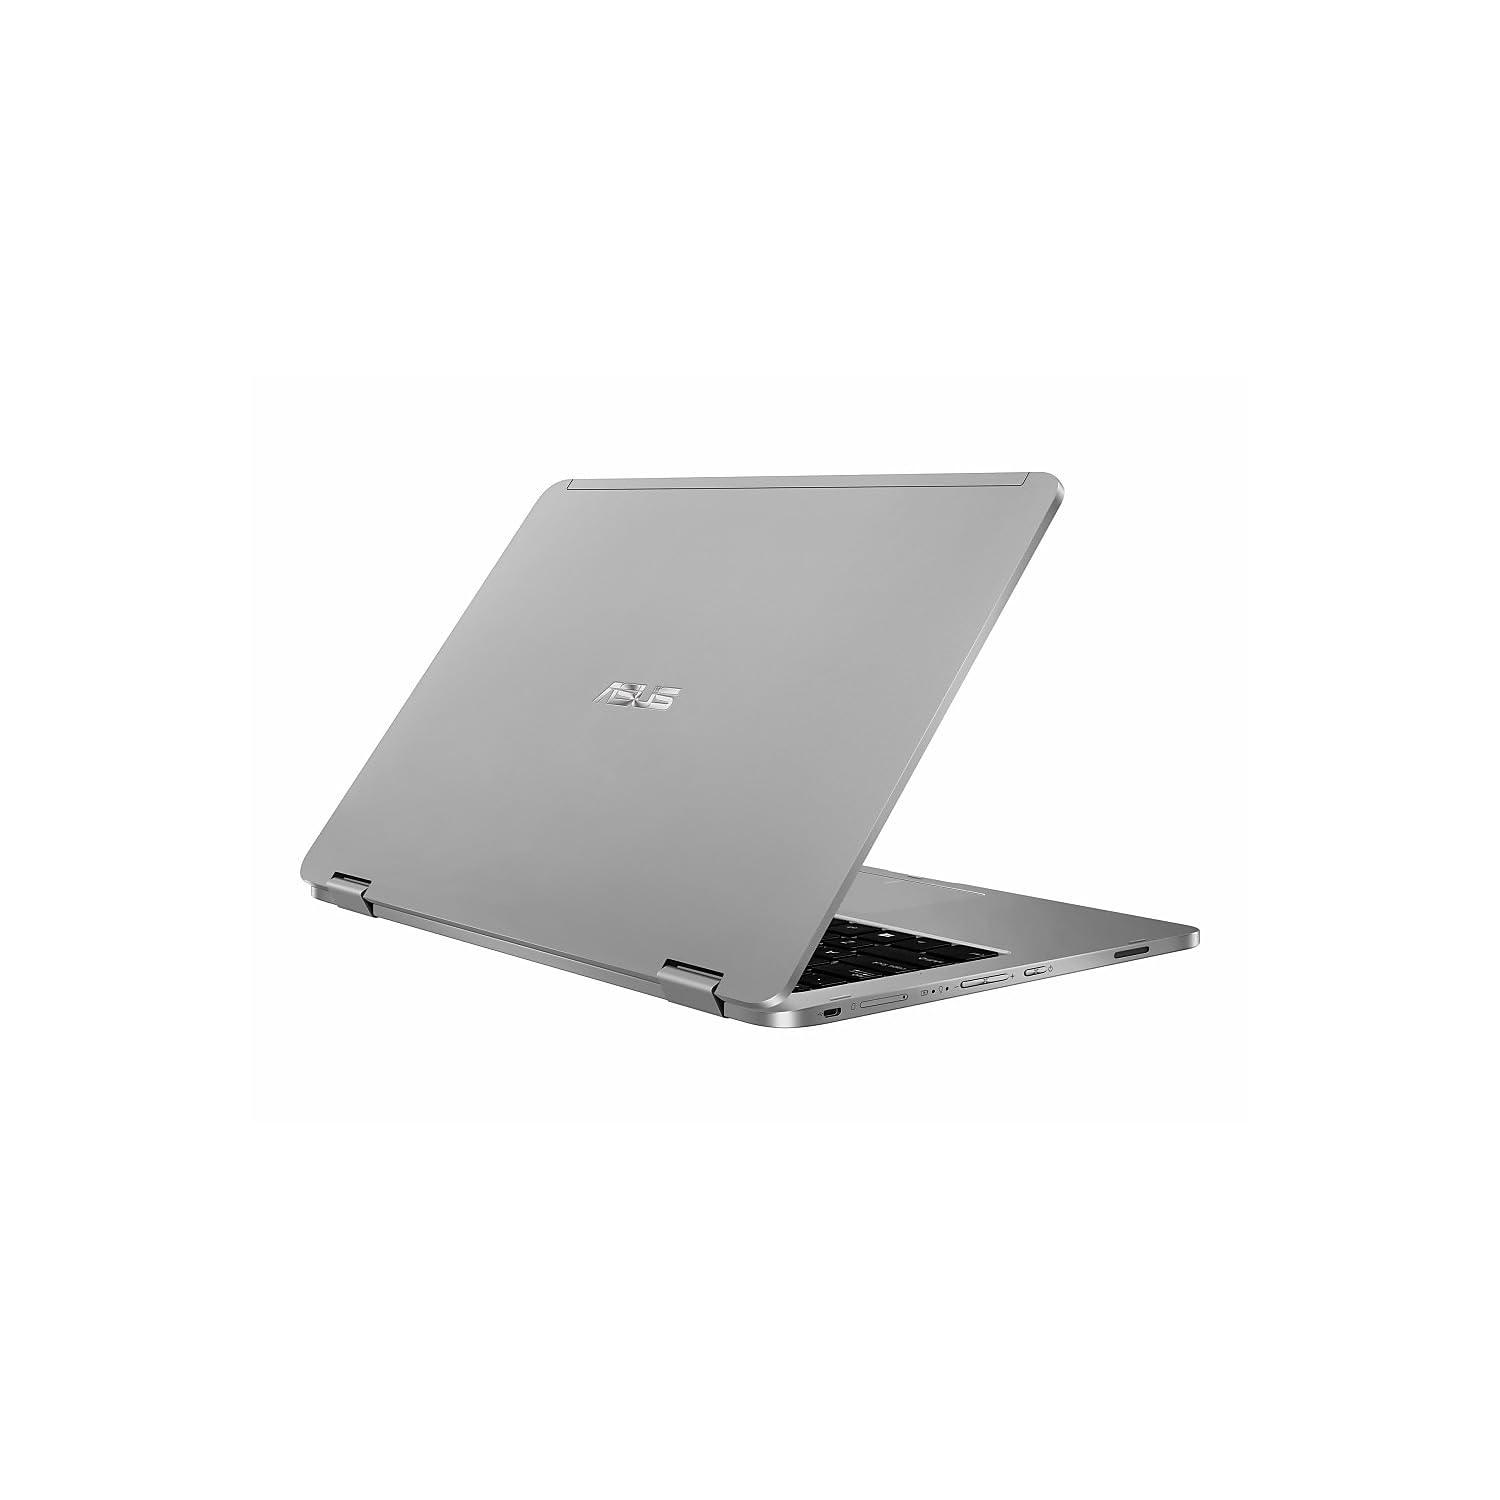 ASUS VivoBook Flip 14 Thin and Light 2-in-1 Laptop, 14” FHD Touchscreen, Intel Pentium Silver N5030 Processor, 4GB RAM, 128GB Storage, Windows 10 Home in S Mode, Light Grey, Fingerprint, J401MA-ES21T